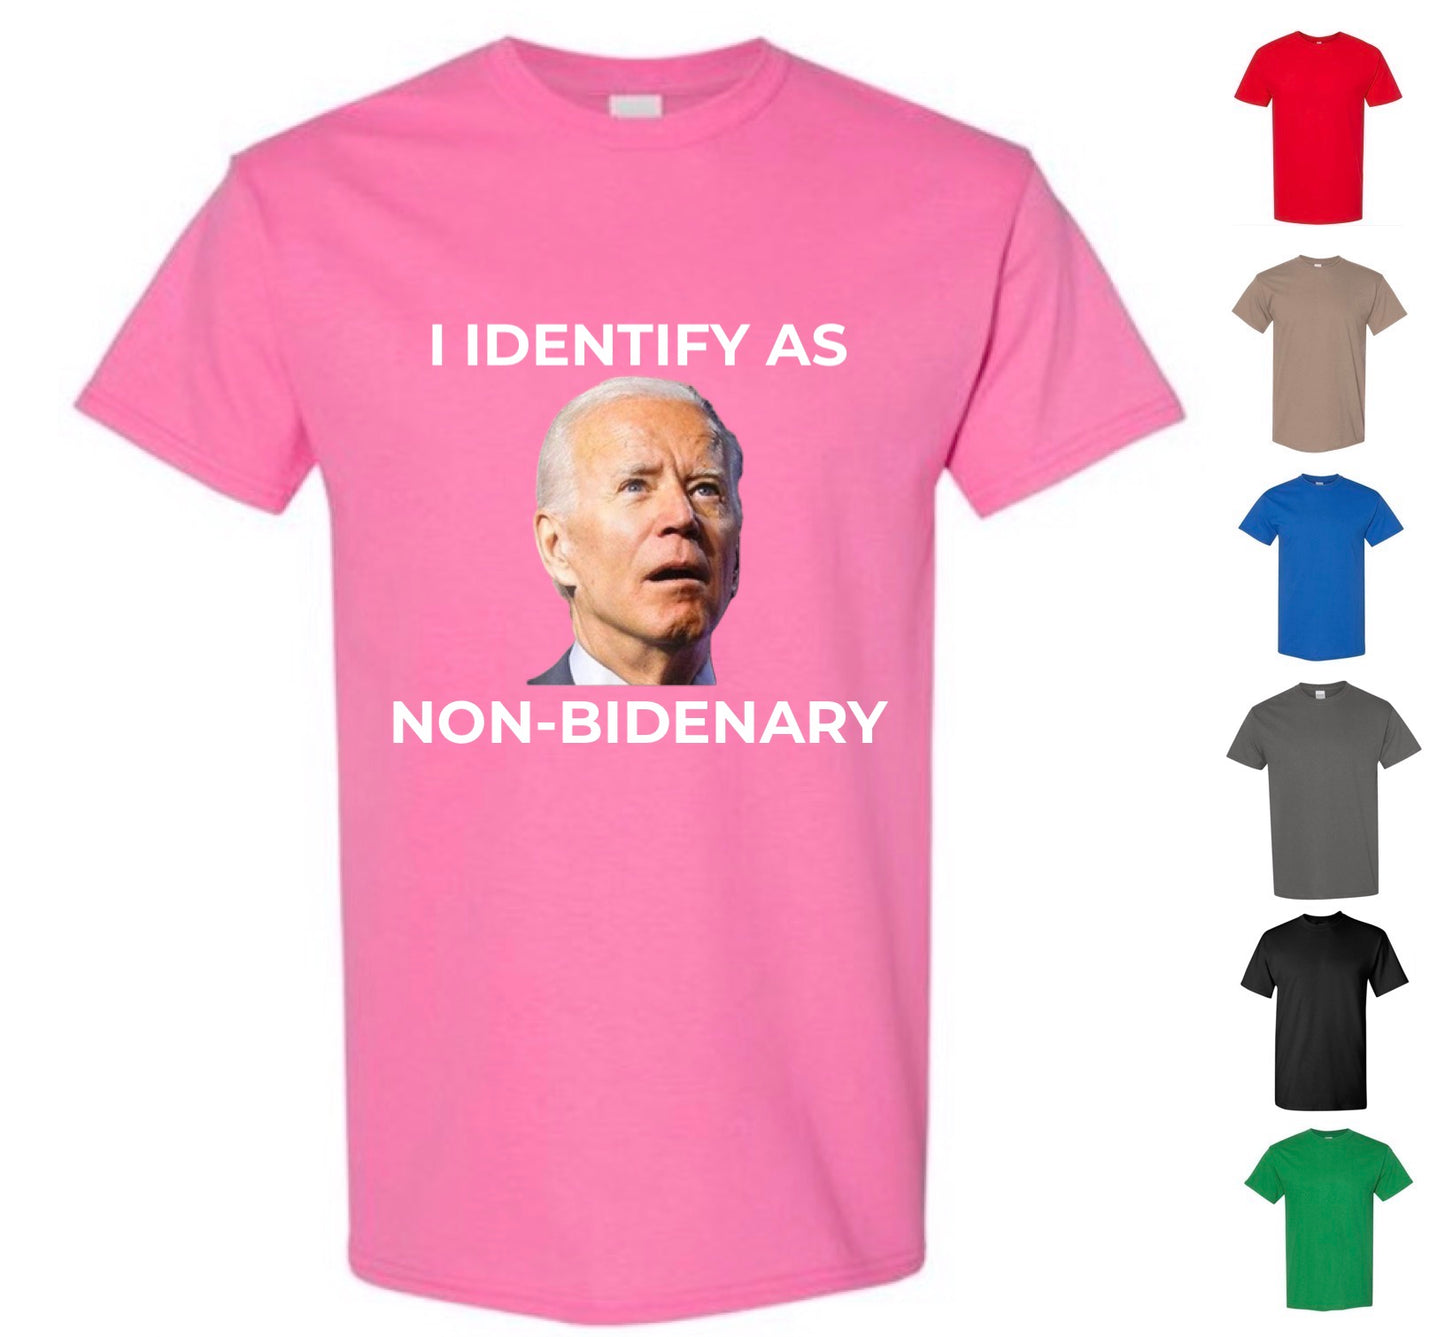 I Identify As Non-Bidenary T-Shirt (FREE Shipping!)